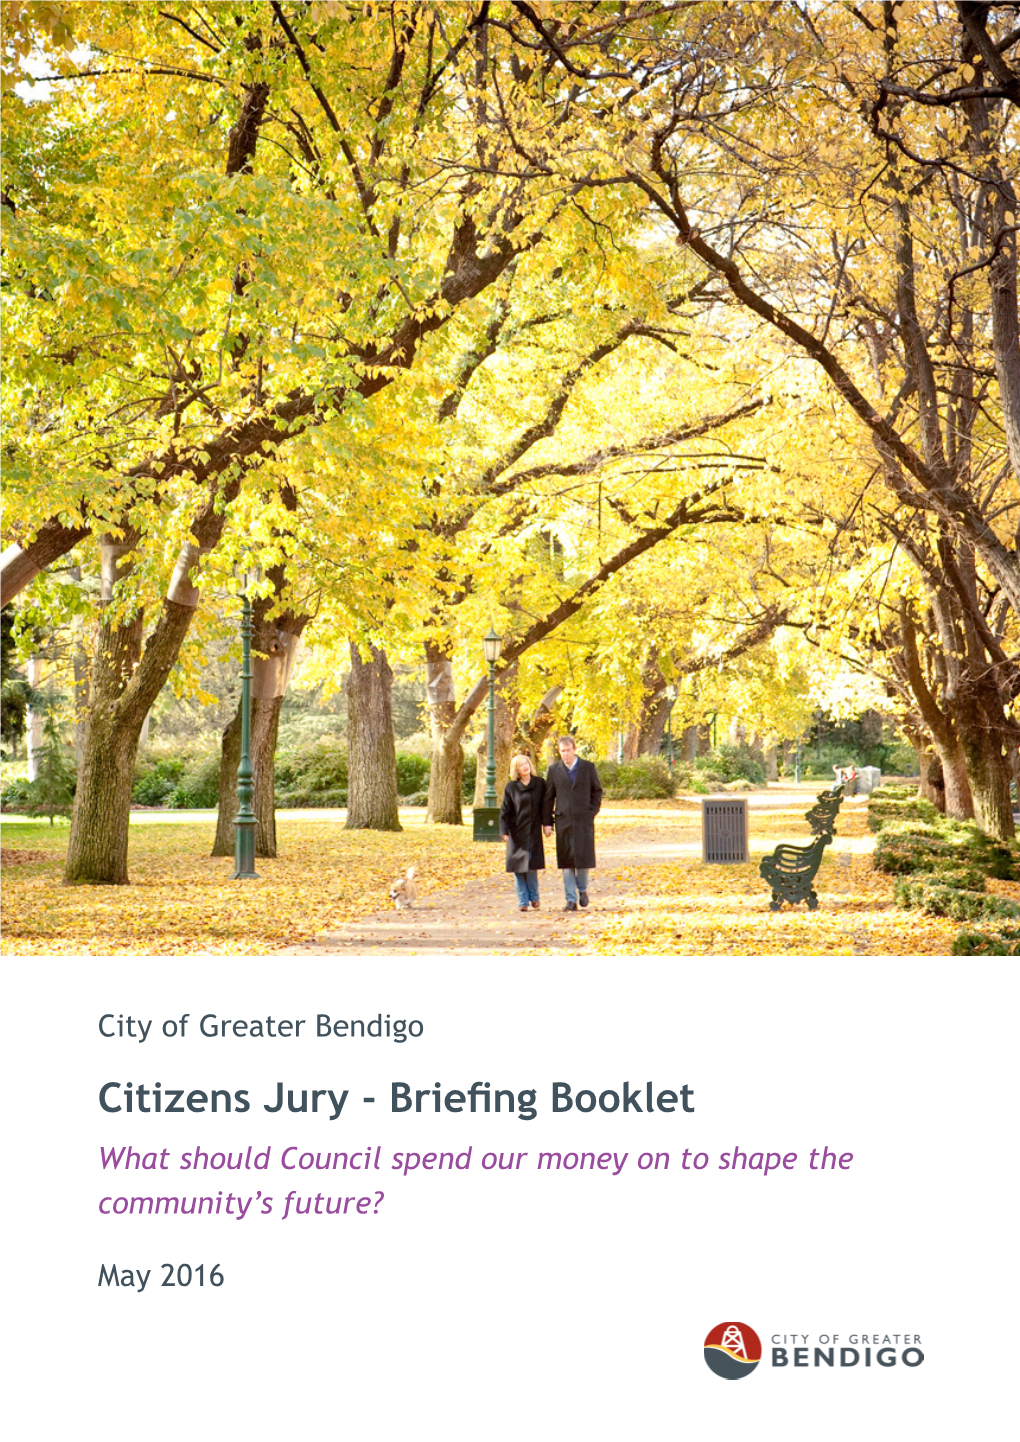 City of Greater Bendigo Citizens' Jury Briefing Book